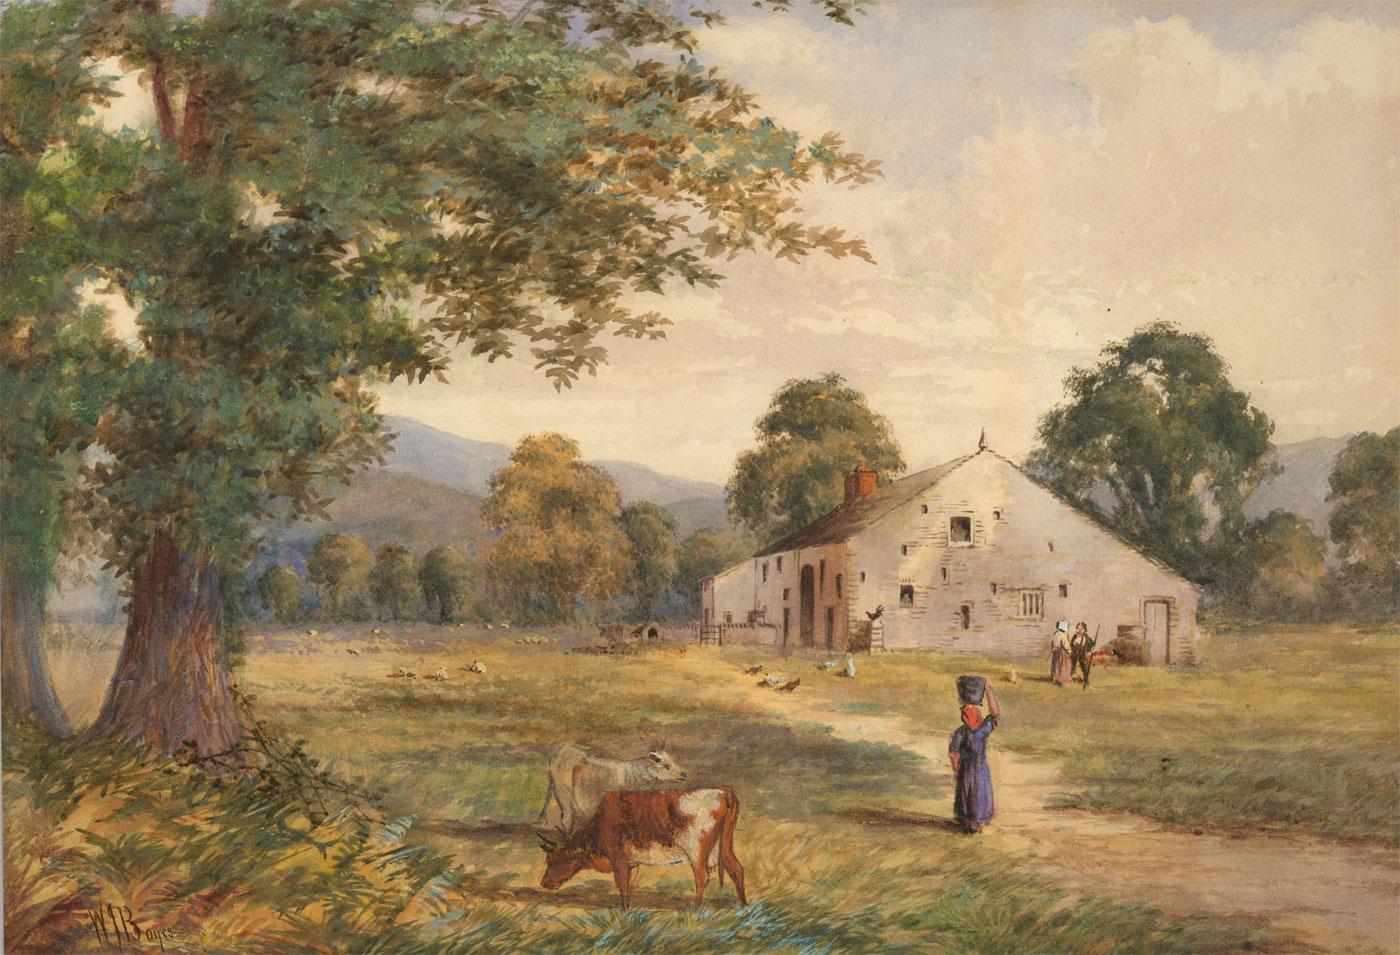 Unknown Landscape Art - William Joseph Boyes (1847-1935) - 19th Century Watercolour, Morning at the Farm